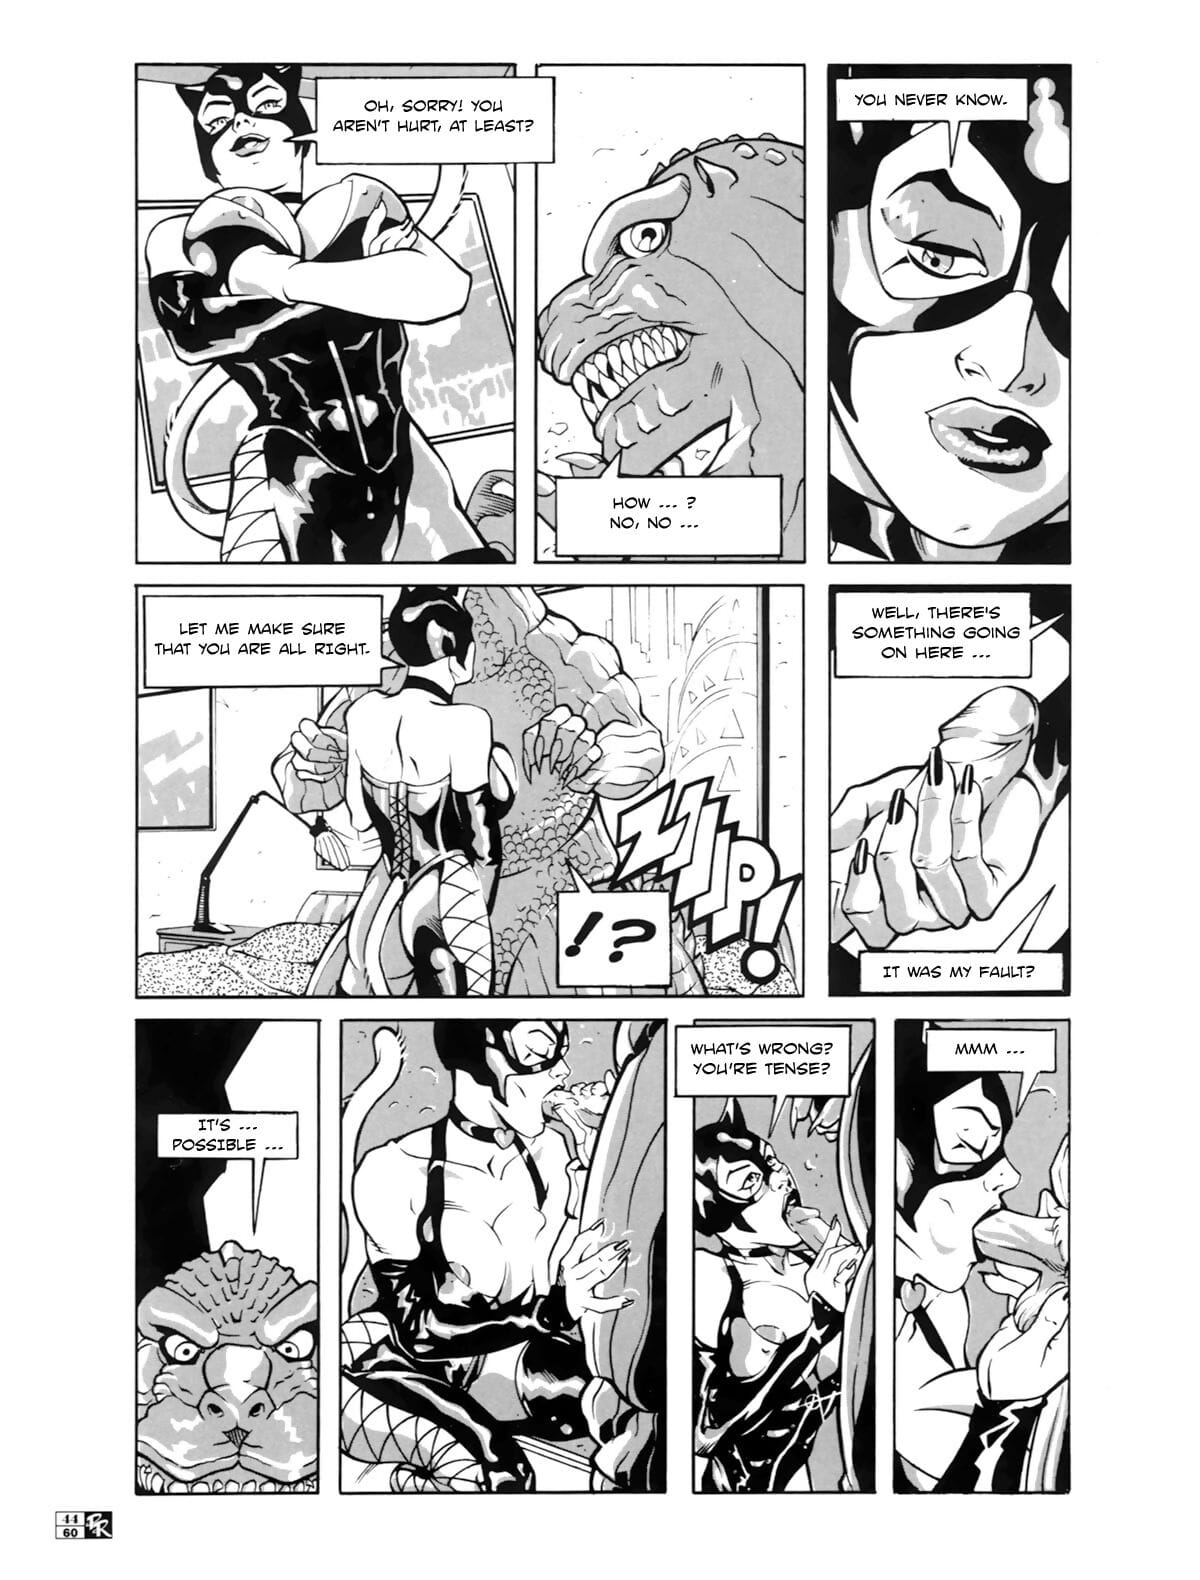 Godzilla V.S. Catwoman page 1